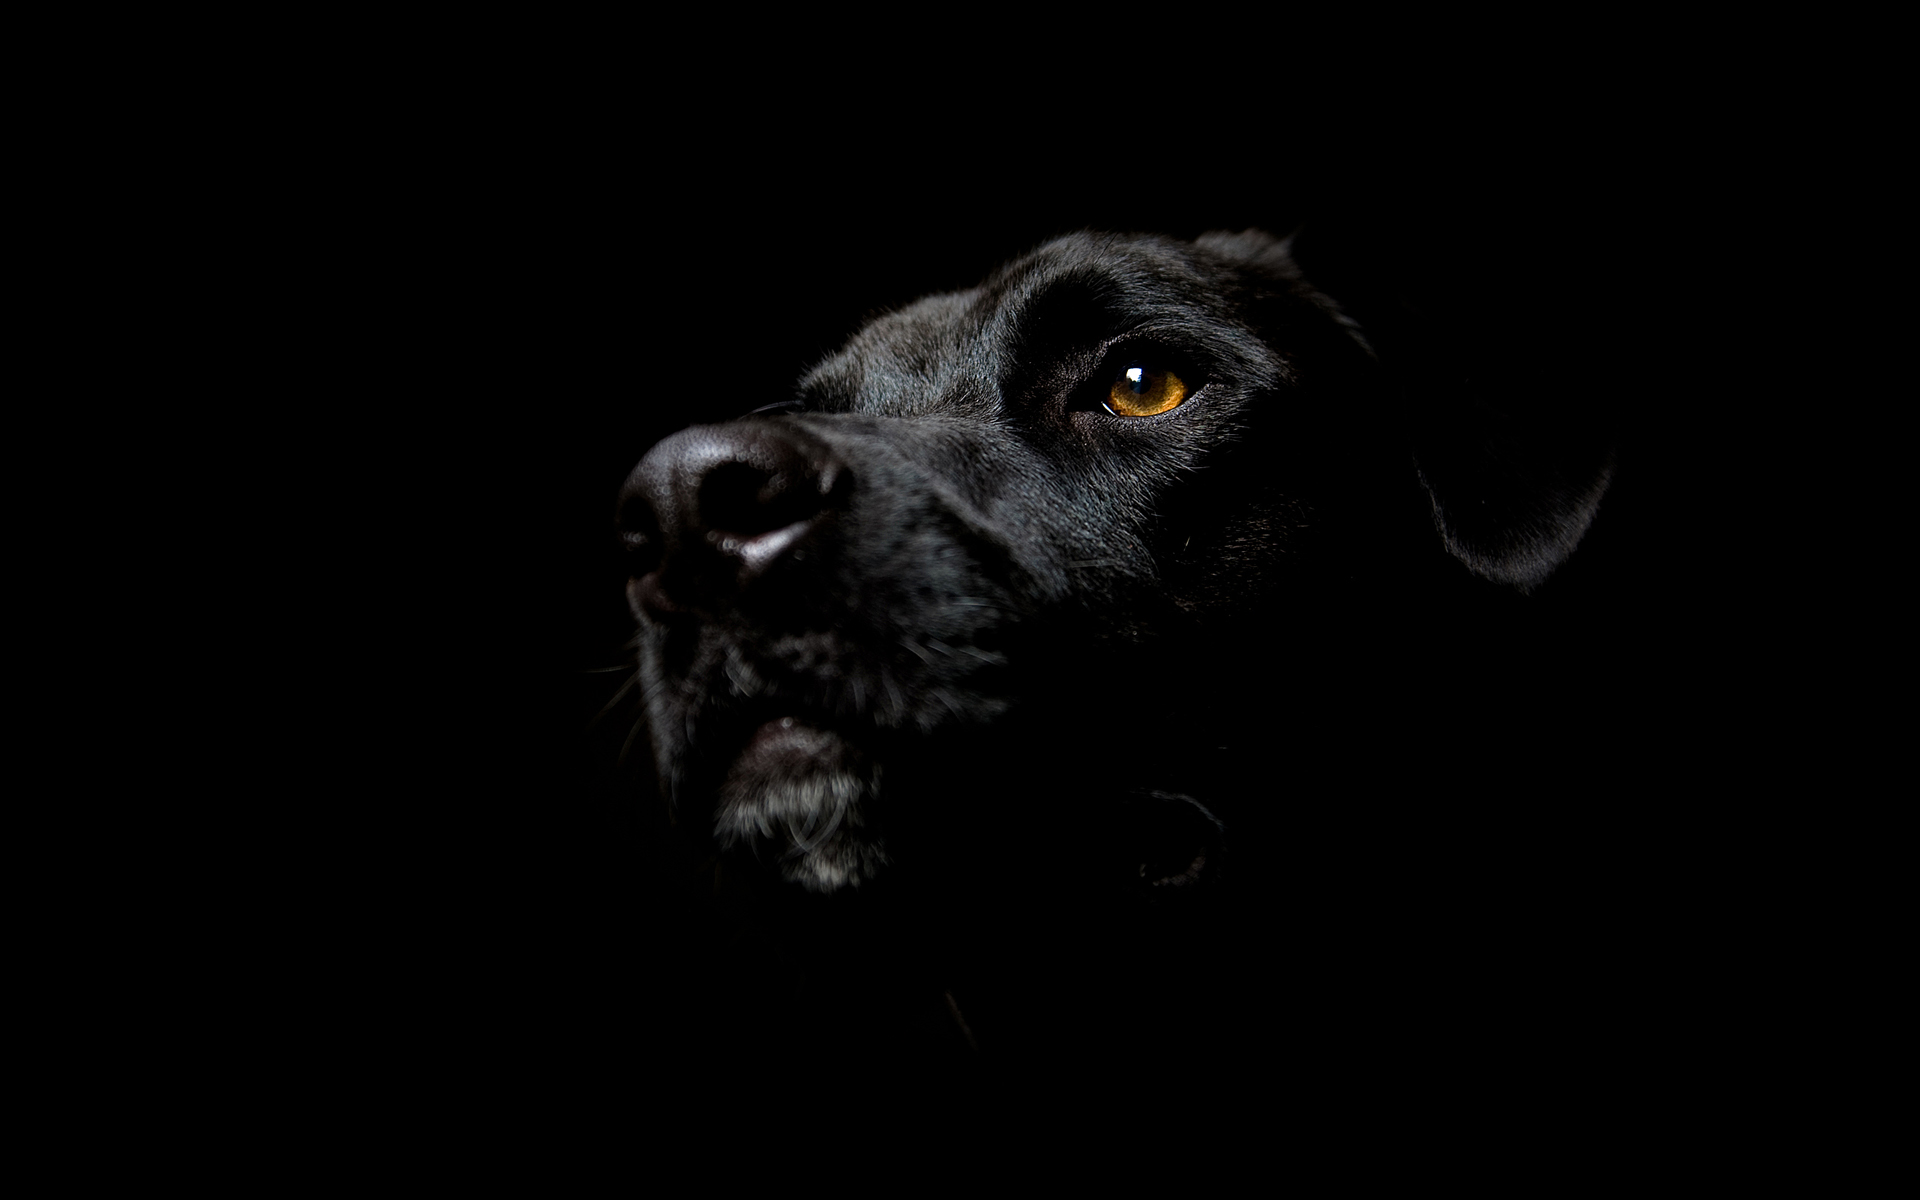 Noir-esque Dog By Canada